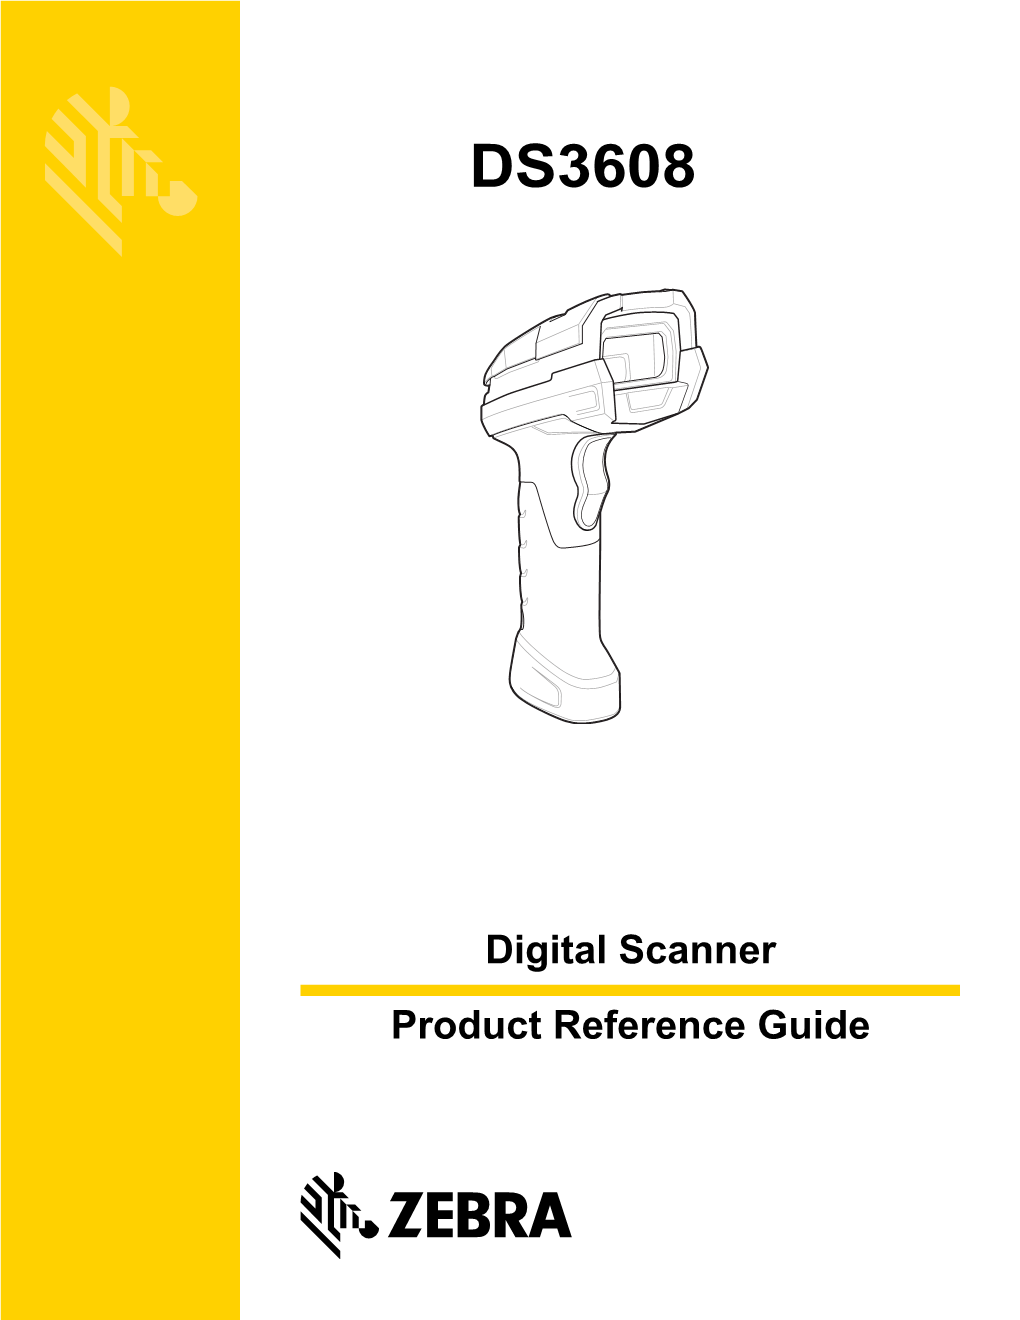 DS4308/DS4308P Digital Scanner Product